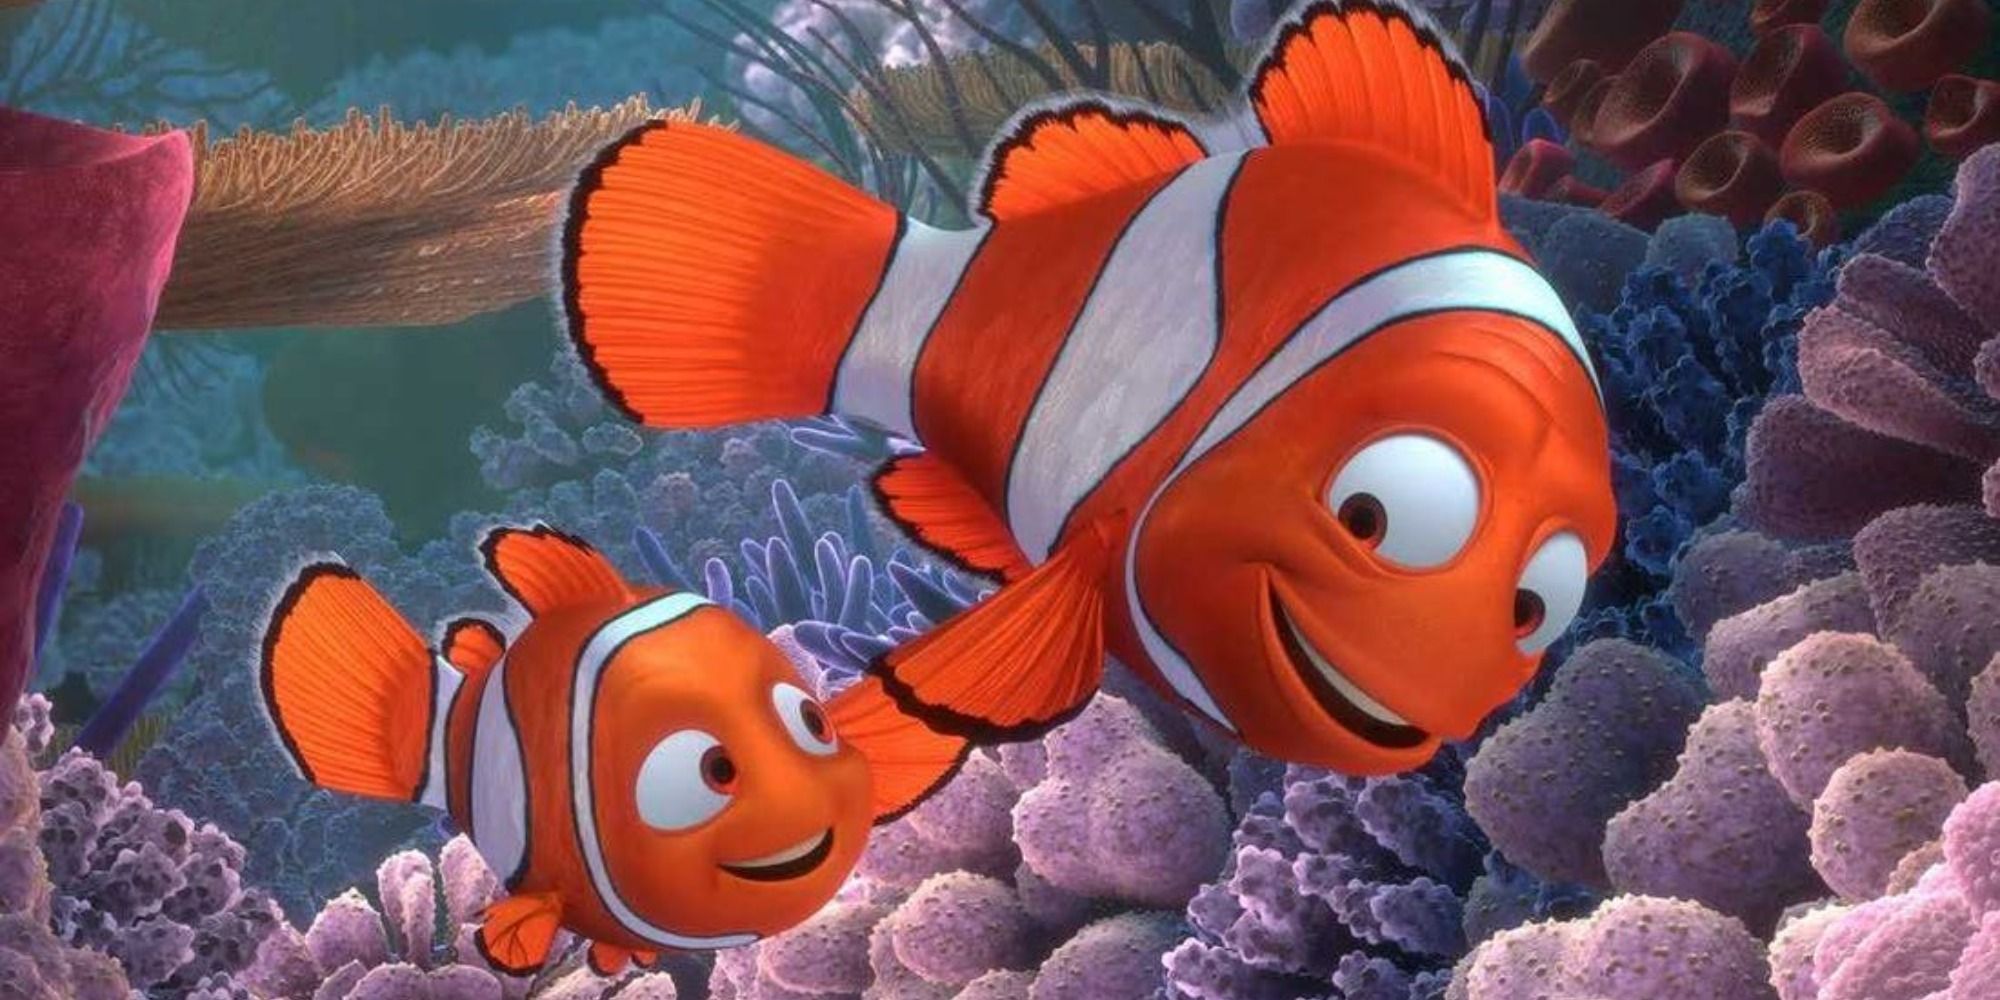 Nemo Doesn’t Really Exist: Dark Pixar Fan Theory Explained